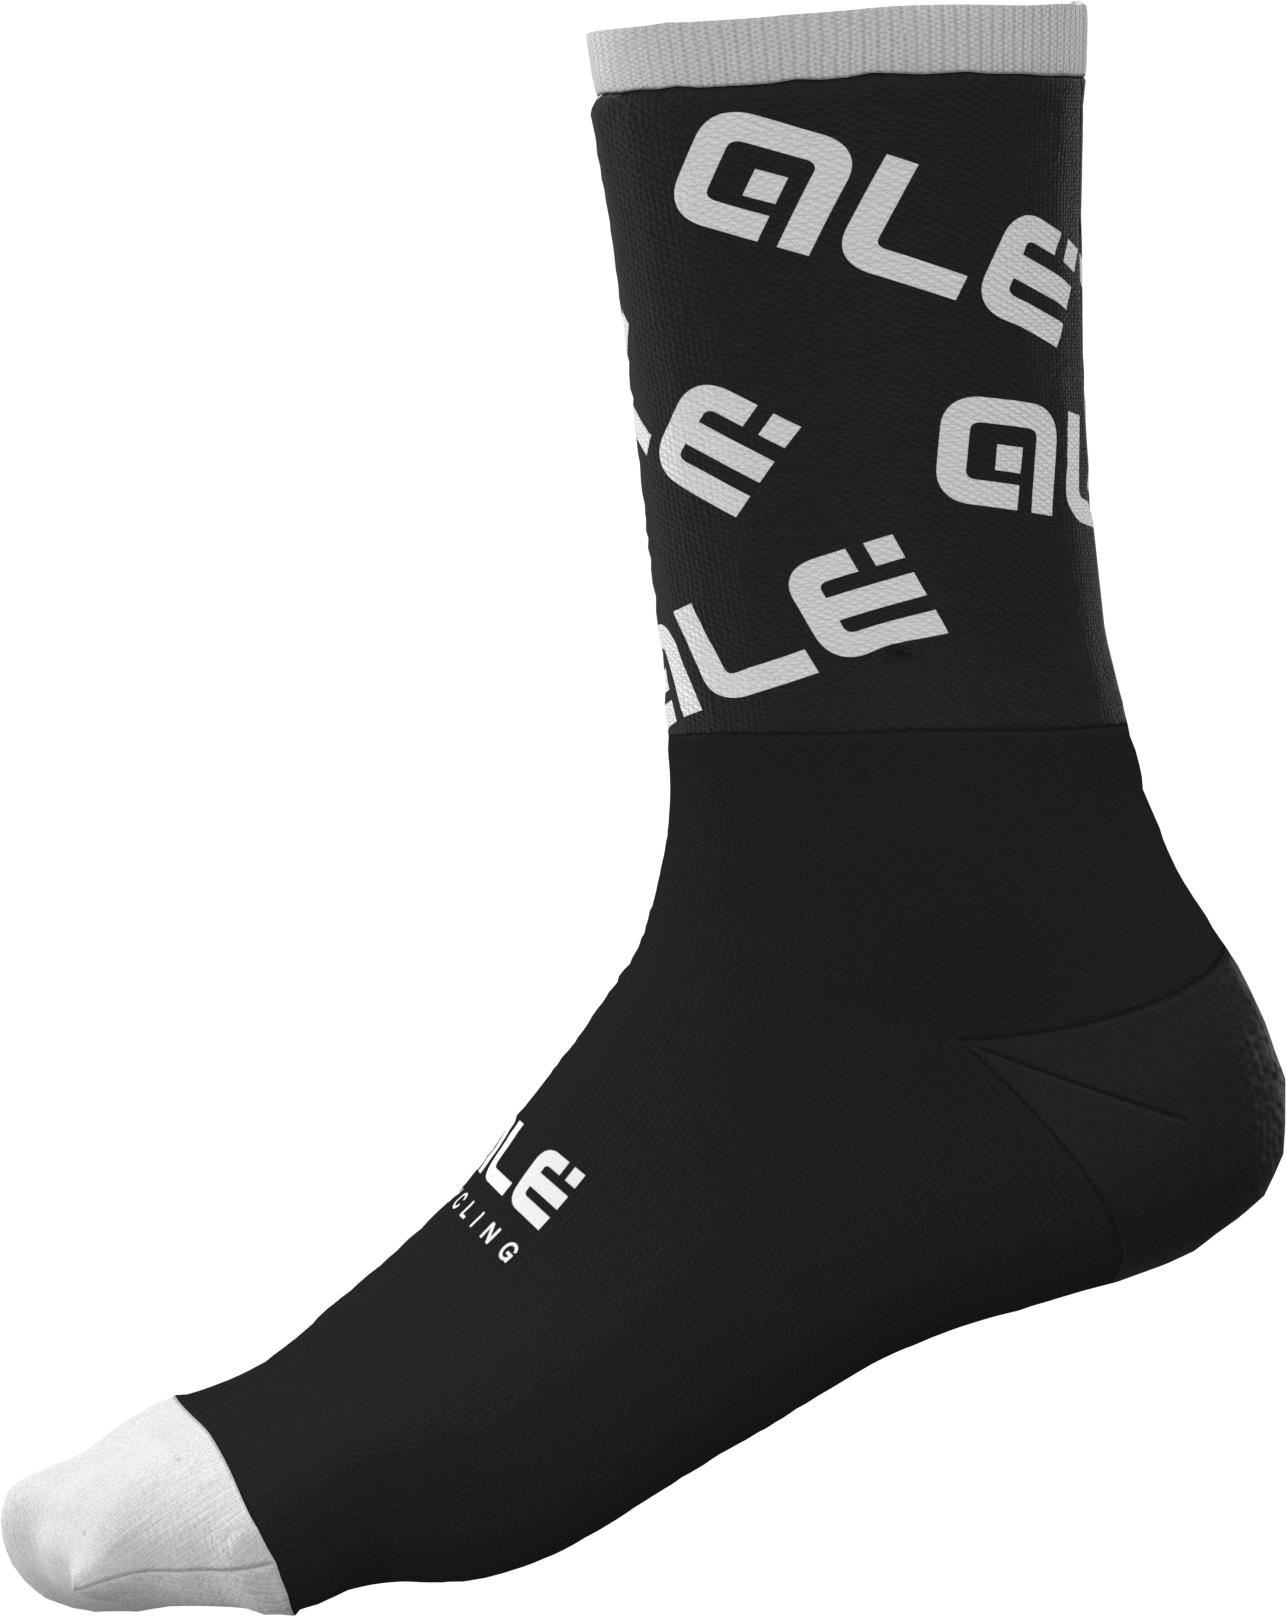 Al Logo 18cm Cycling Socks - Black/white